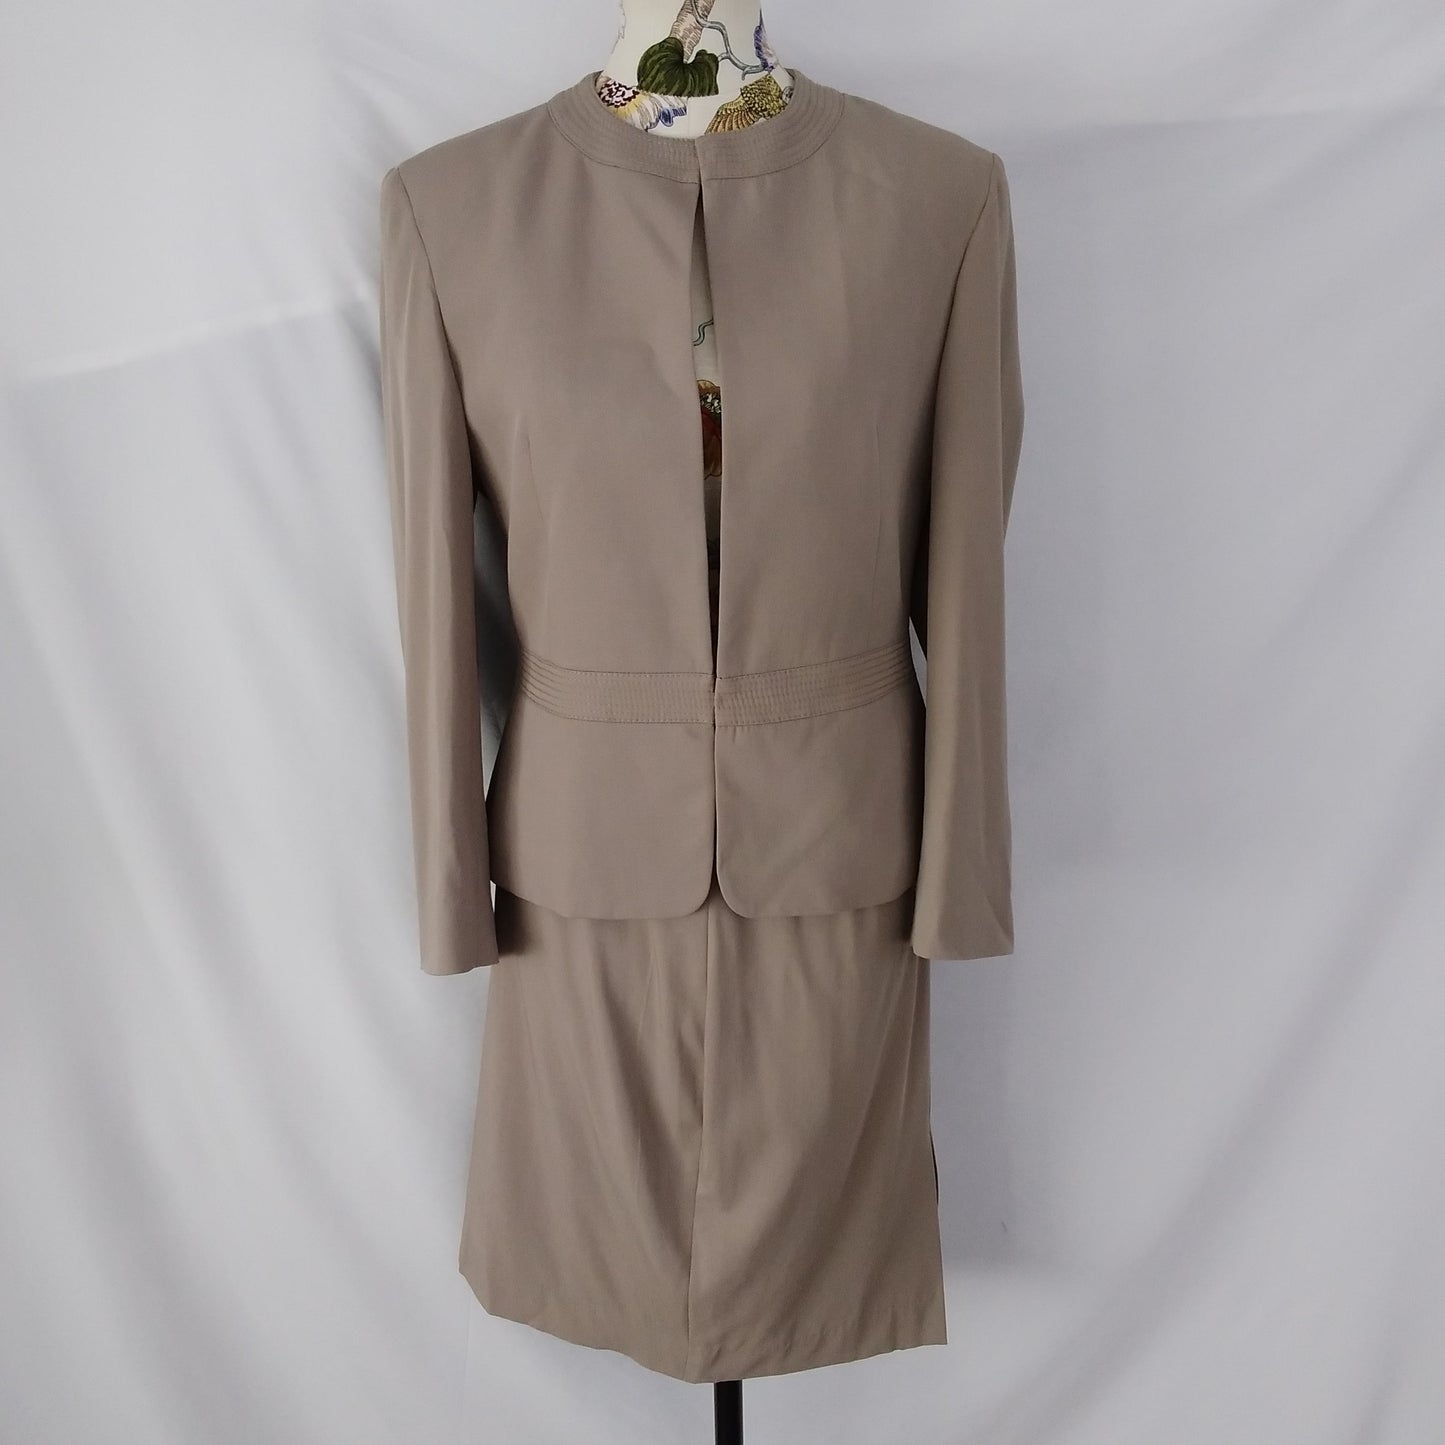 Marlowe Tan Wool Skirt Blazer Skirt Suit - Blazer 10, Skirt 8